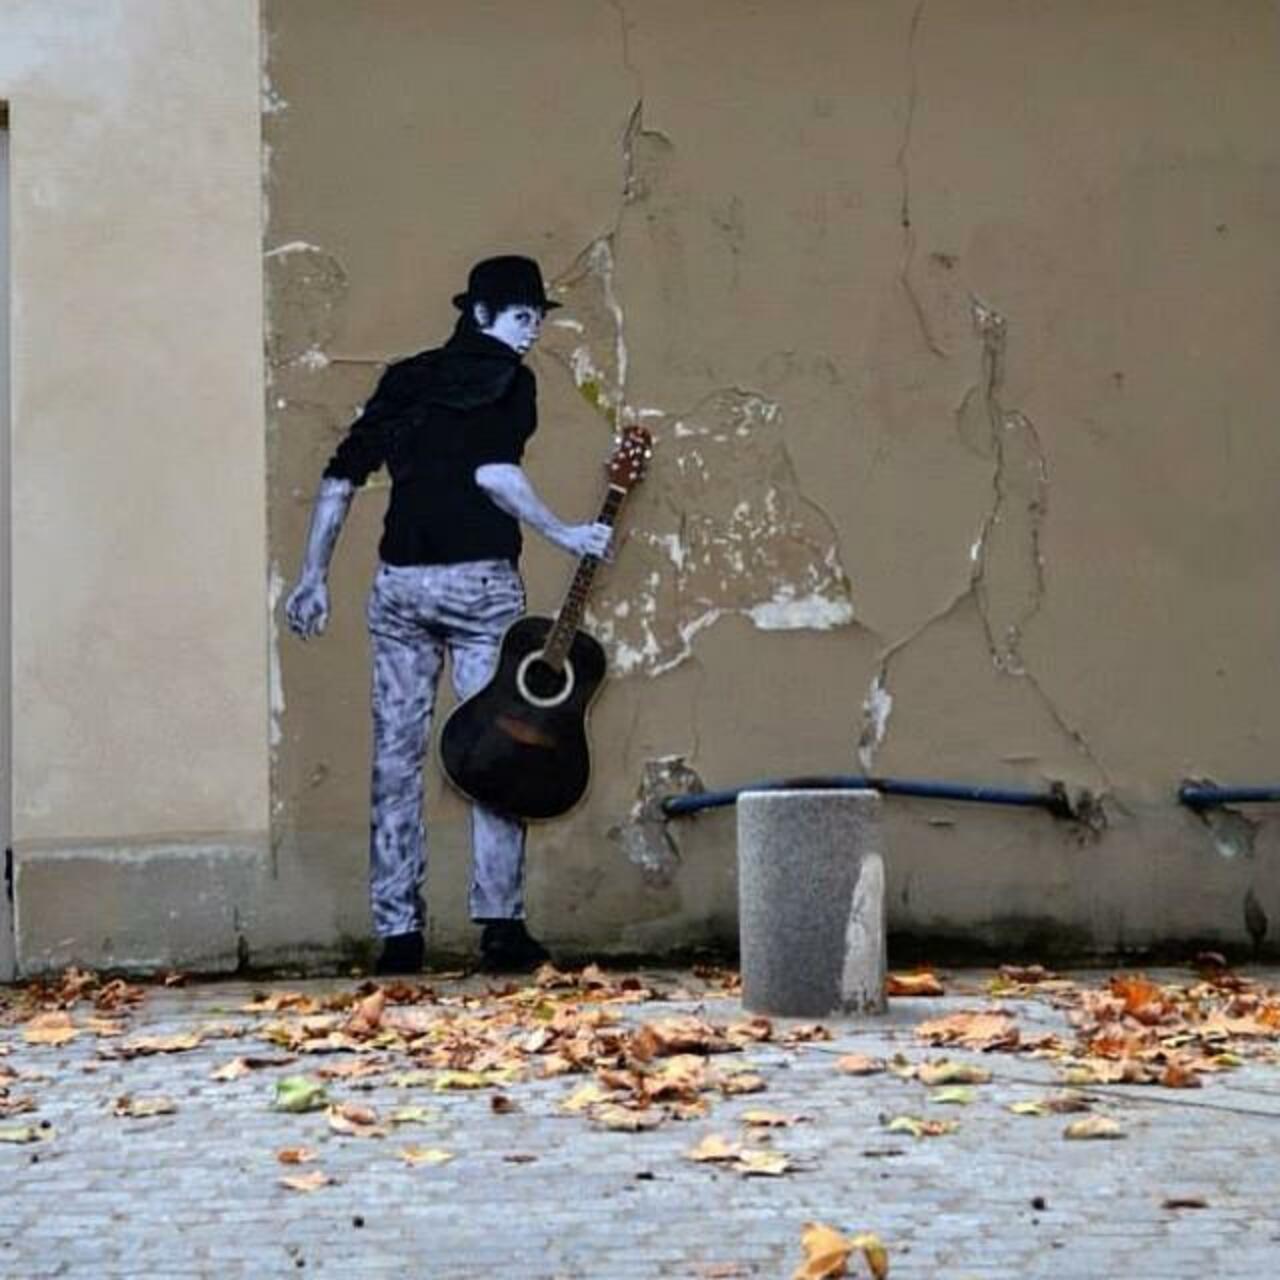 Orphée #levalet #paris #streetart #streetartparis #arturban #art #artparis #nofilter #graffiti by levaletdessinderue http://t.co/pKD03hMMeq